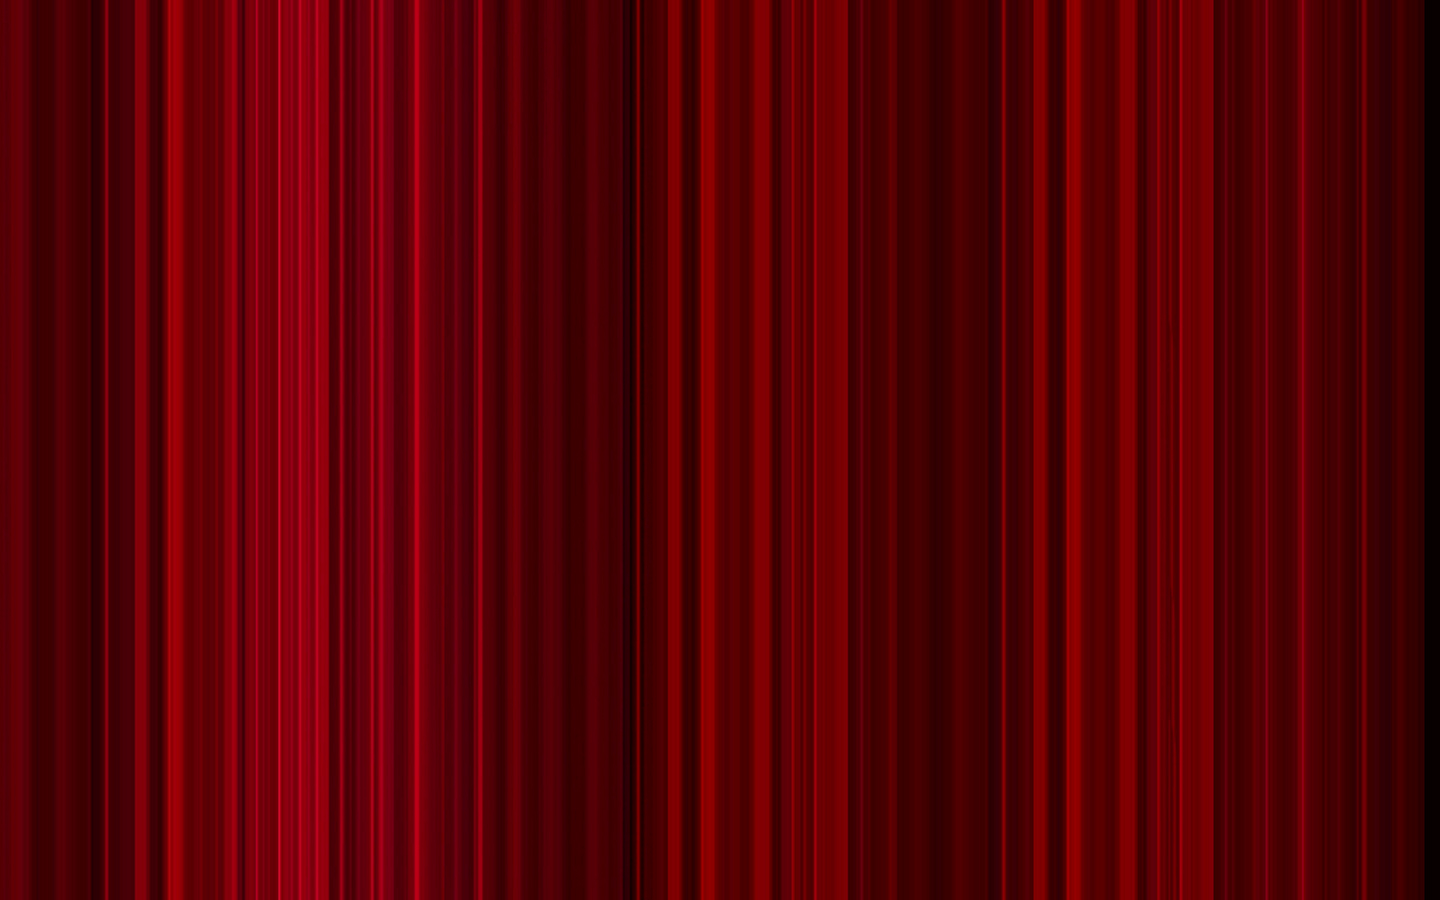  Background  Warna Merah  Marun  Rahman Gambar